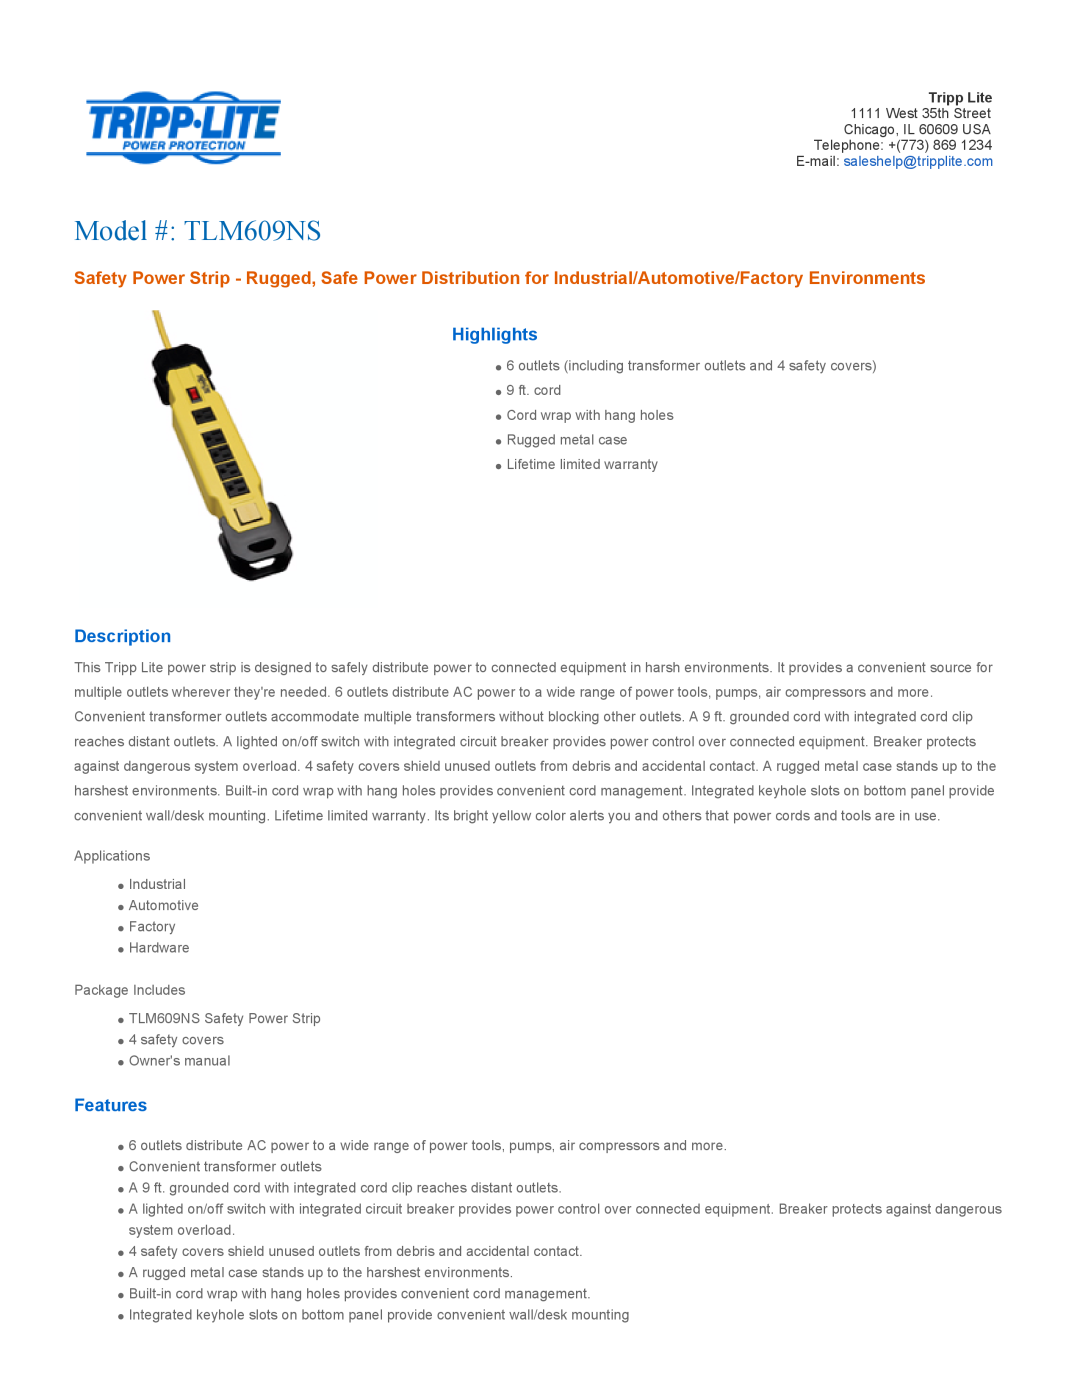 Tripp Lite warranty Highlights, Description, Features, Model # TLM609NS 